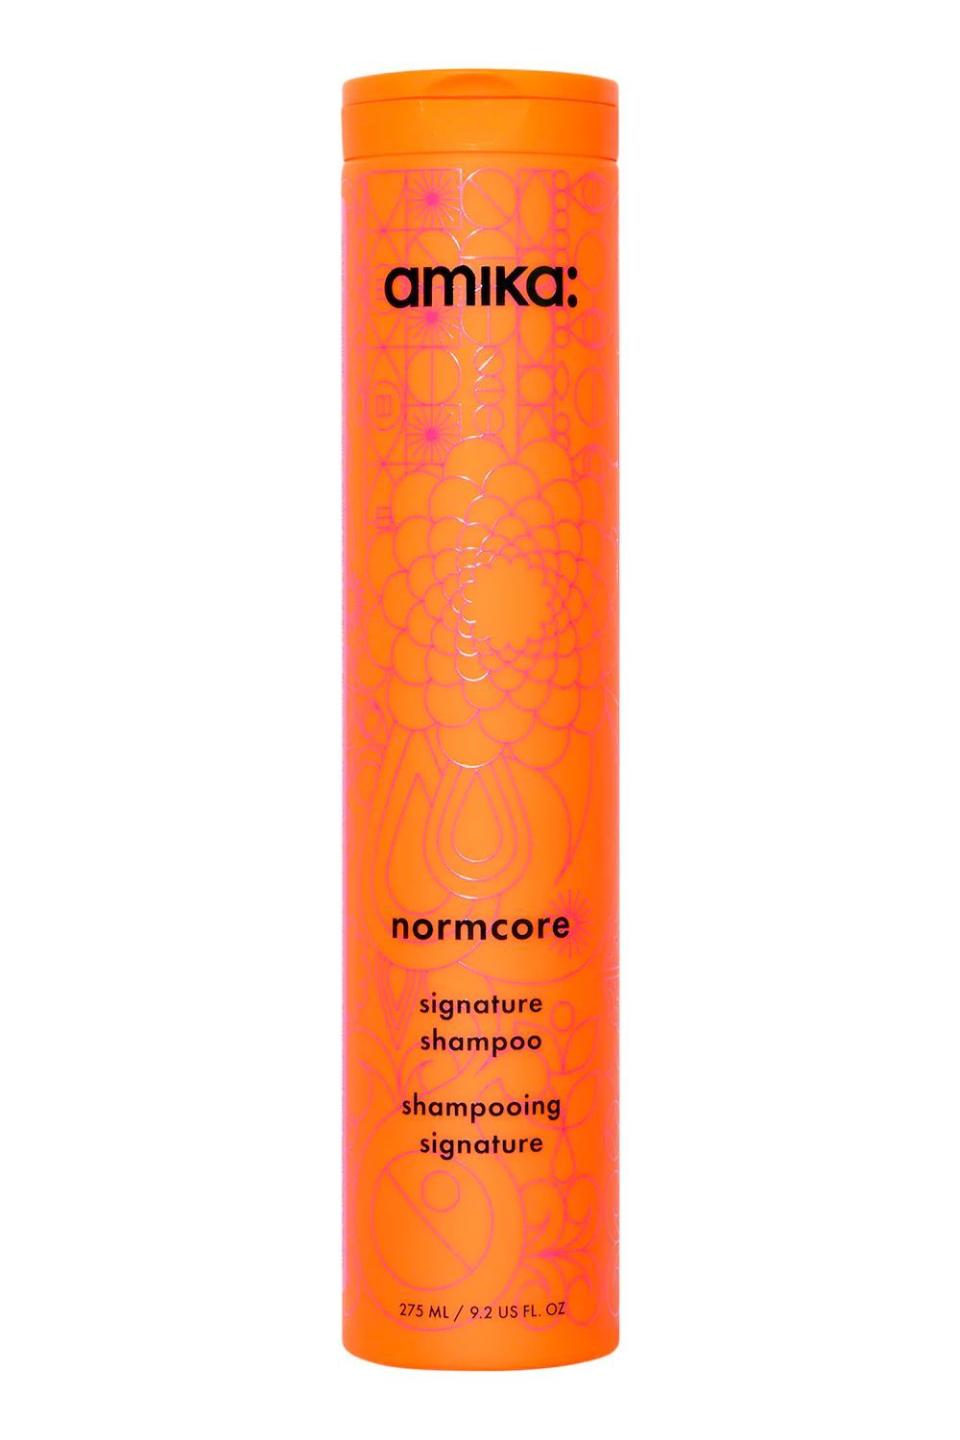 7) Amika Normcore Sulfate-Free Shampoo